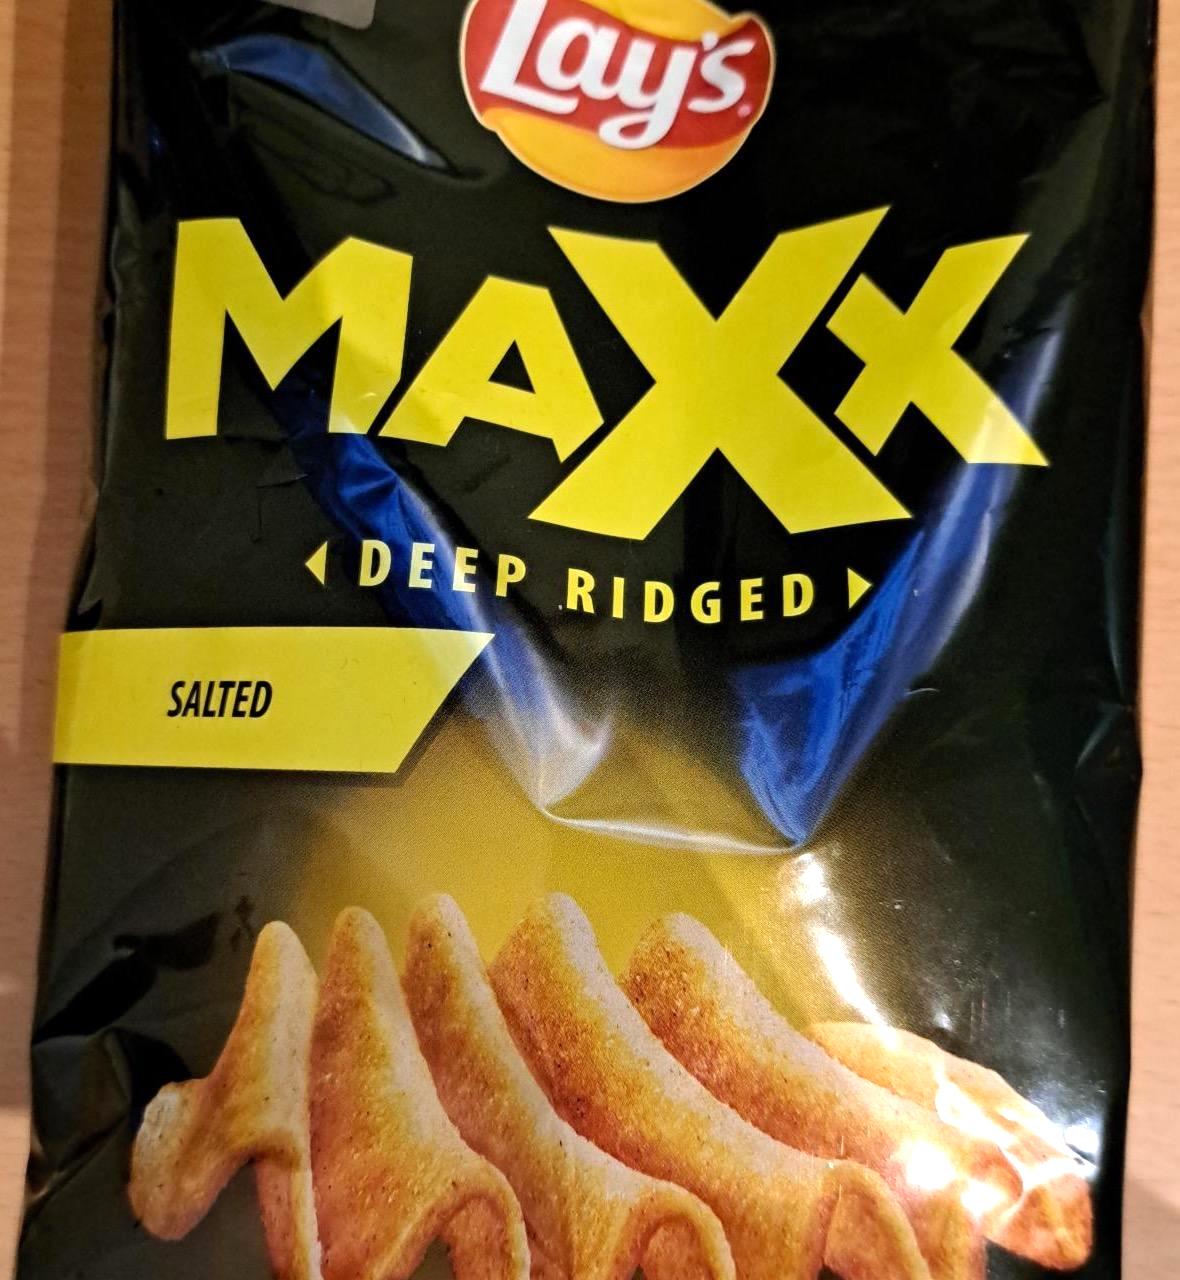 Képek - Lay's Maxx deep ridged sós